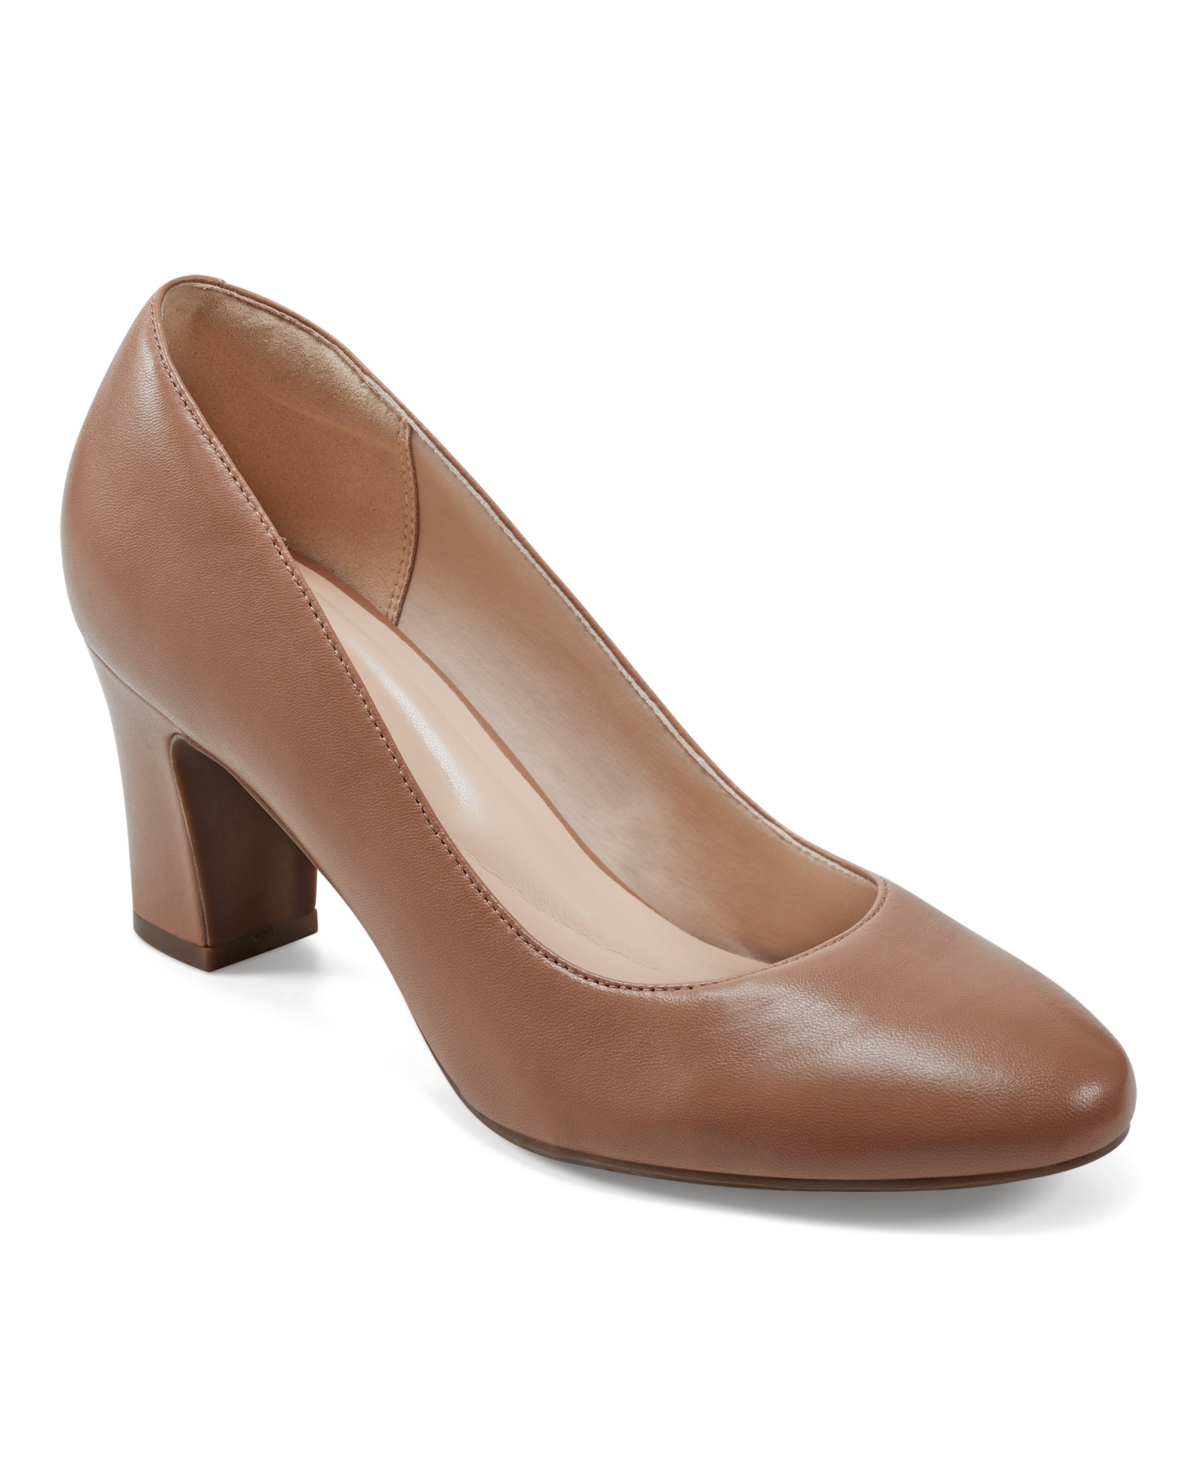 Women's Eflex Priscila Slip-On Almond Toe Dress Pumps - Dark Natural Leather